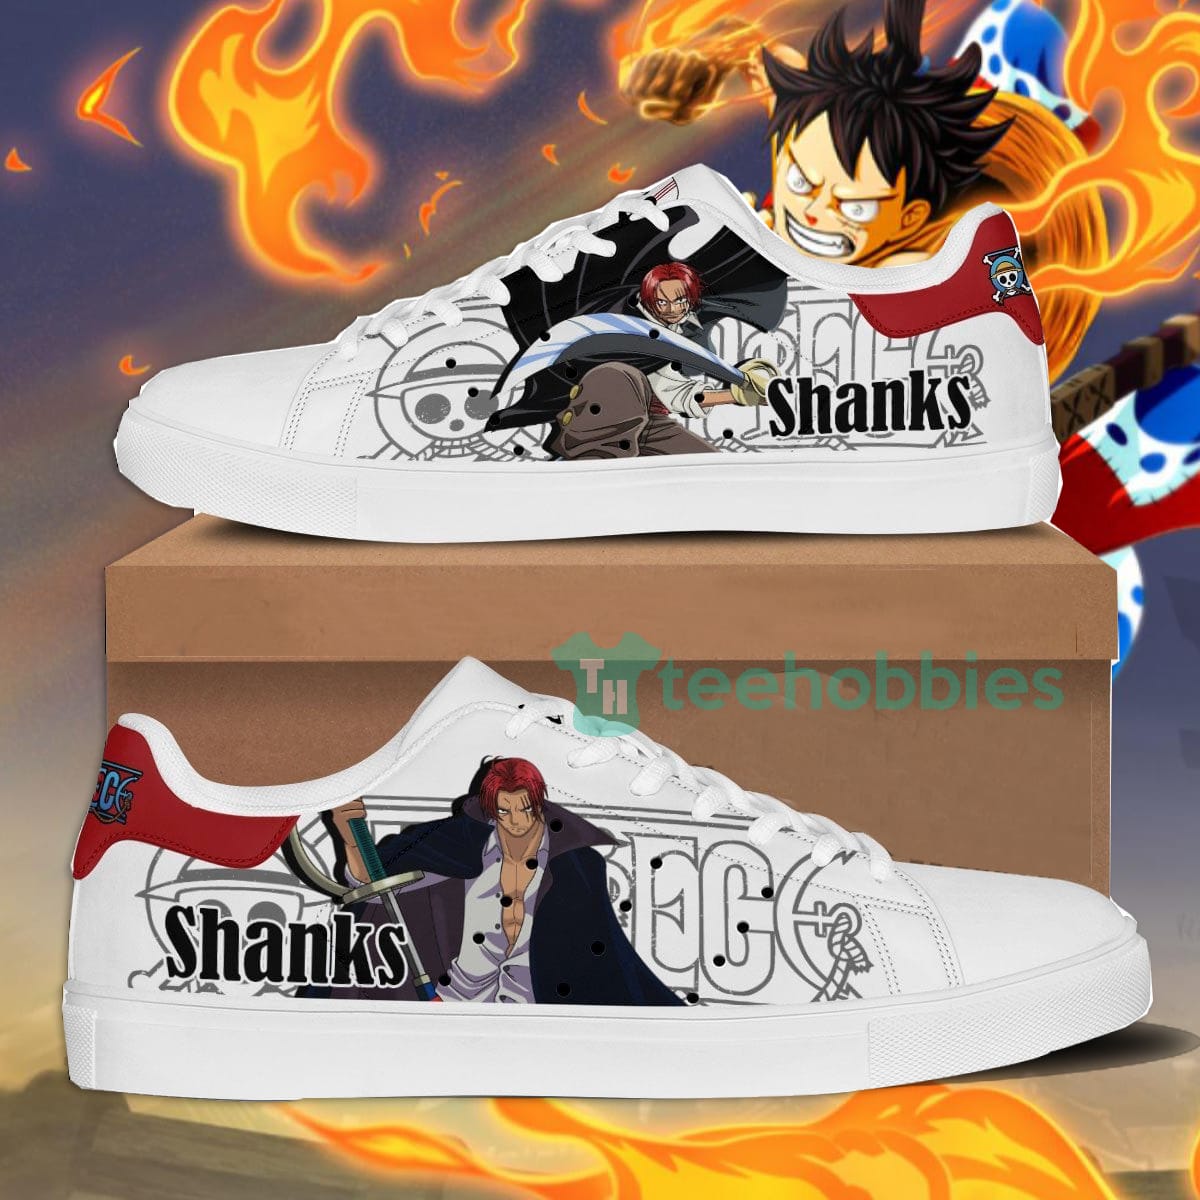 Shanks Custom Anime One Piece Fans Skate Shoes